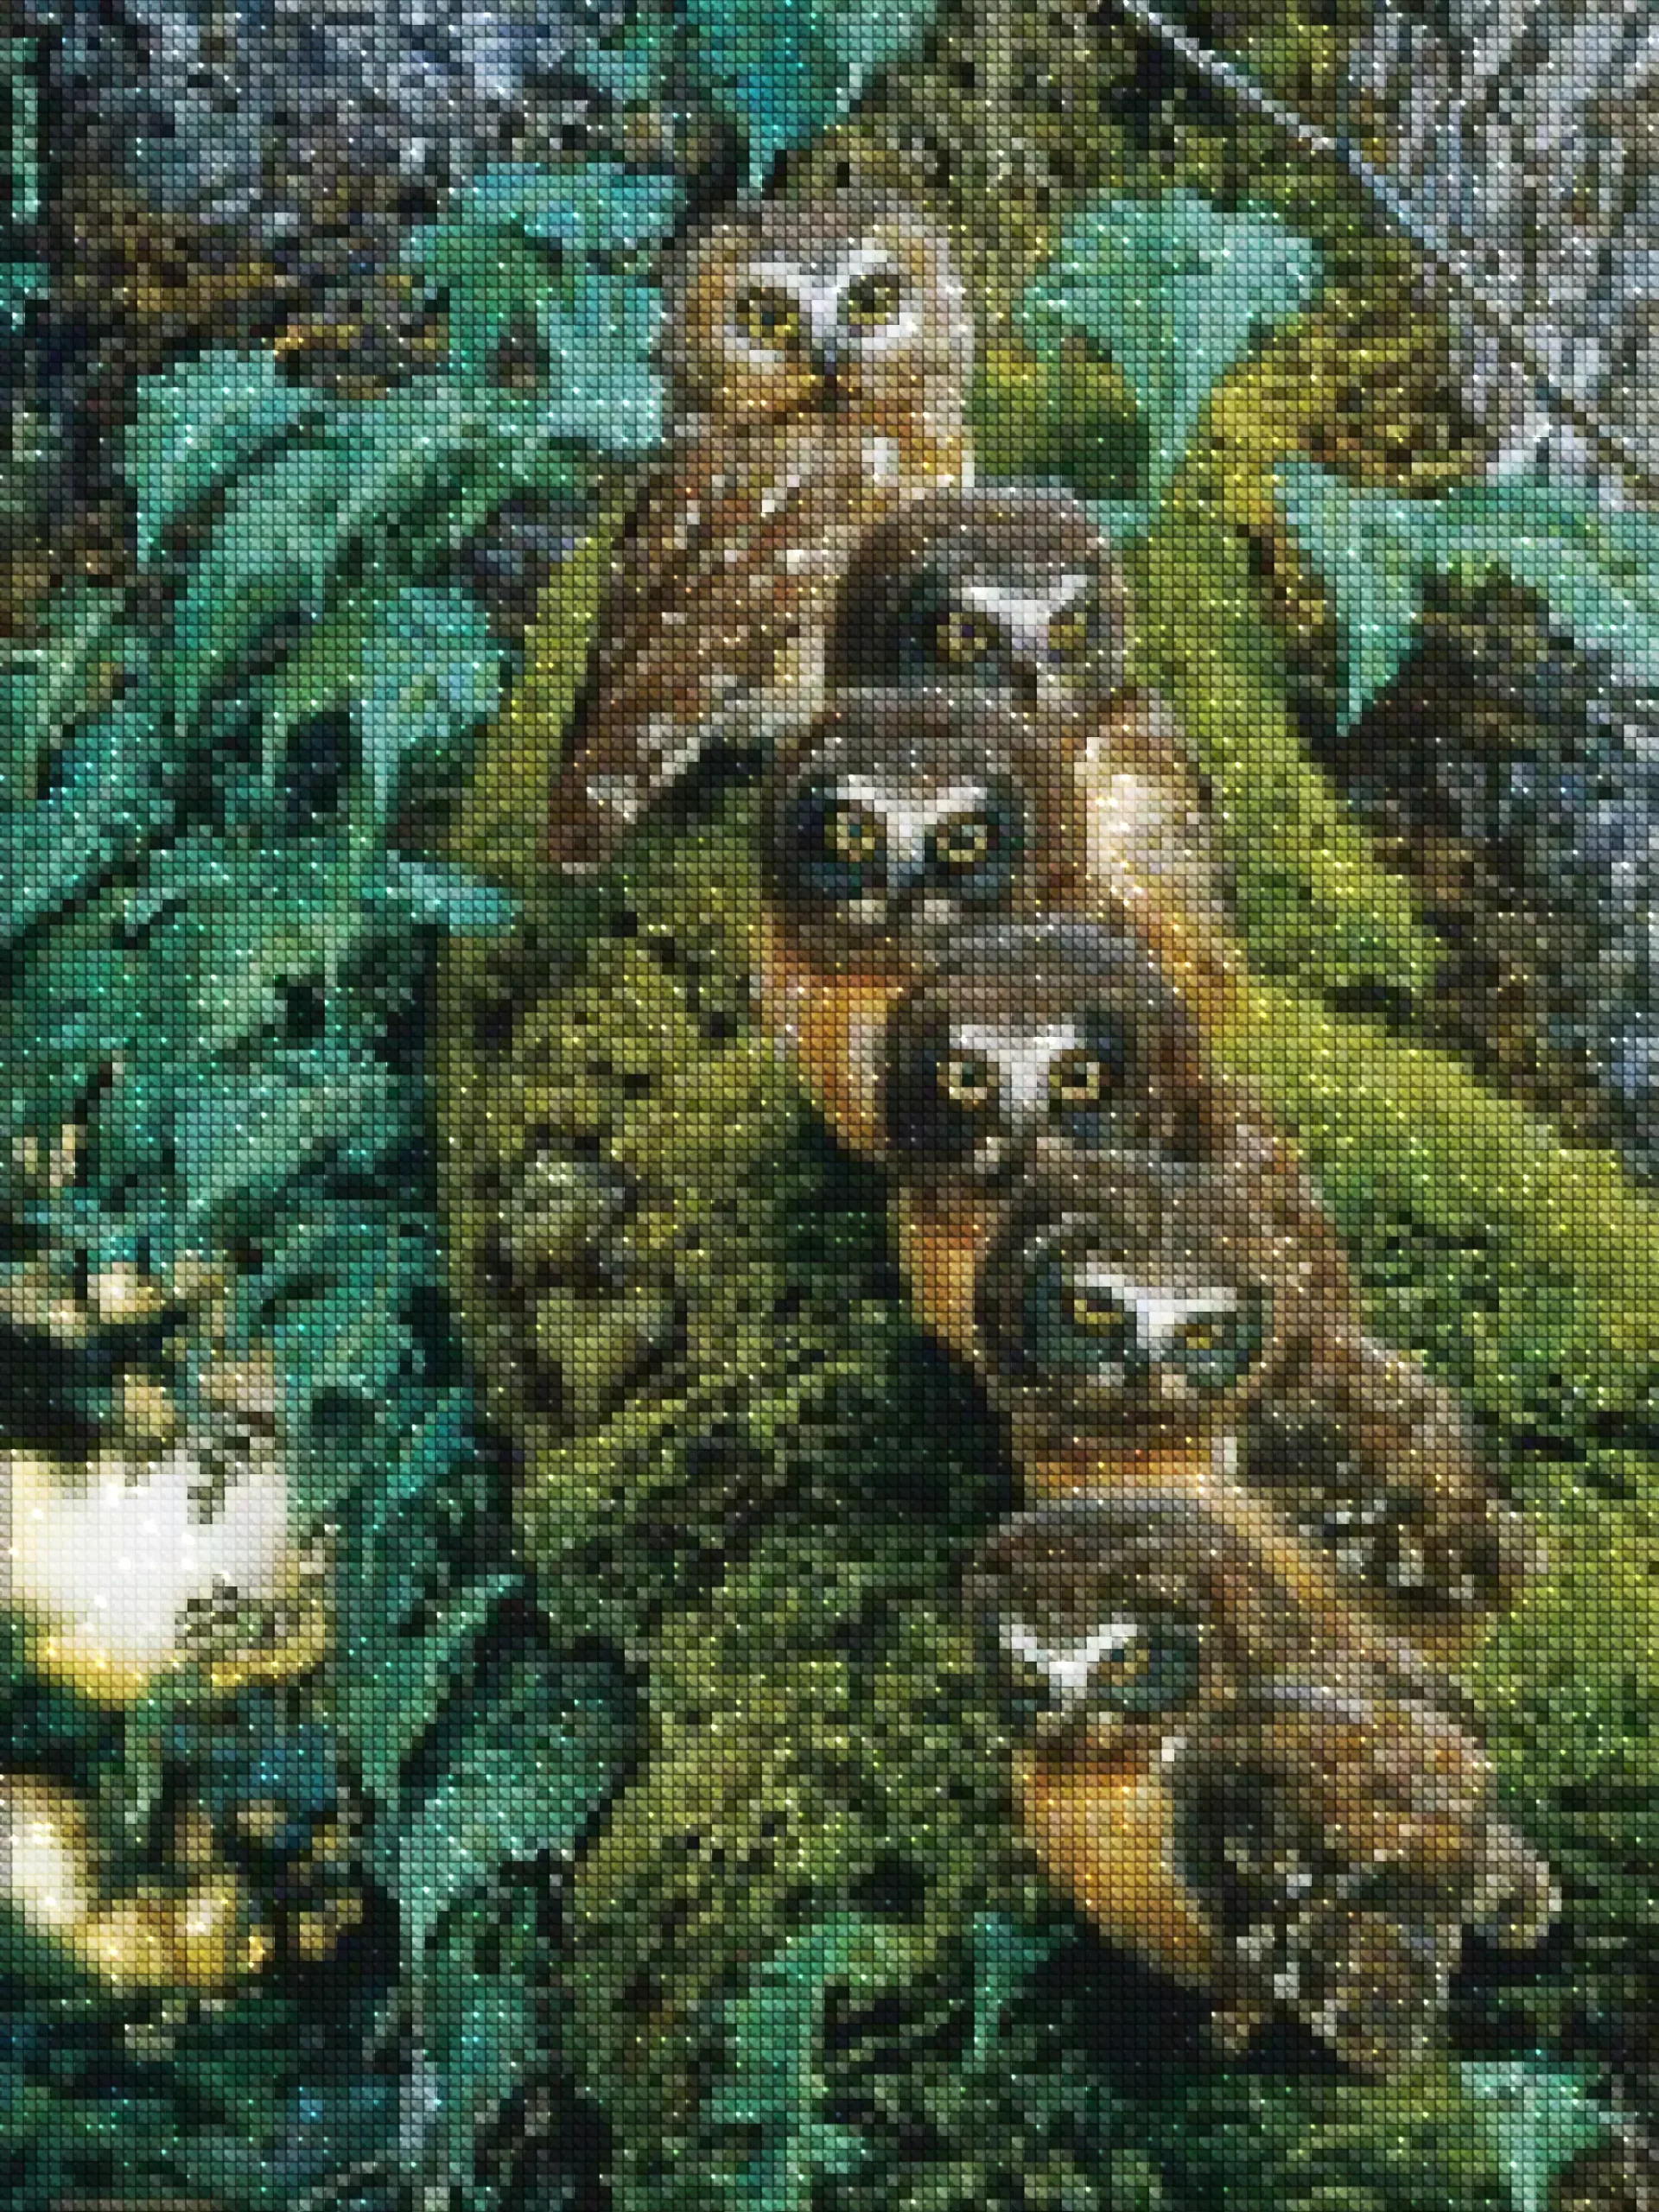 diamonds-wizard-diamond-painting-kits-Animals-Owl-Family Owls on Mossy Log-diamonds.webp